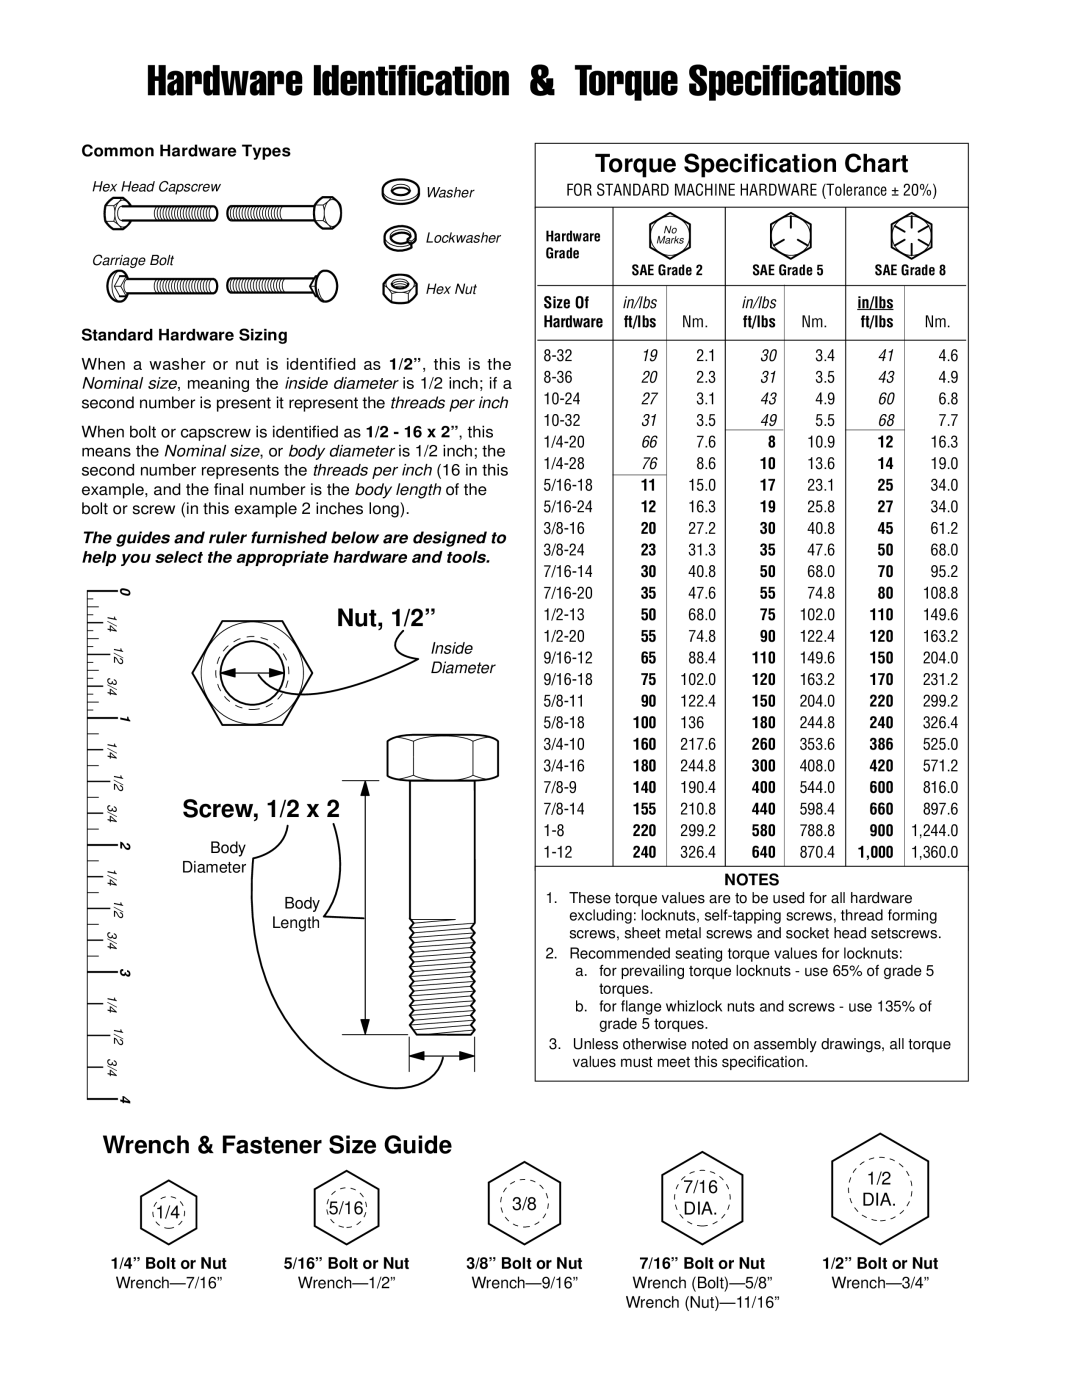 Simplicity 1693706 Hardware Identification & Torque Specifications, Torque Specification Chart, Nut, 1/2”, Screw, 1/2 